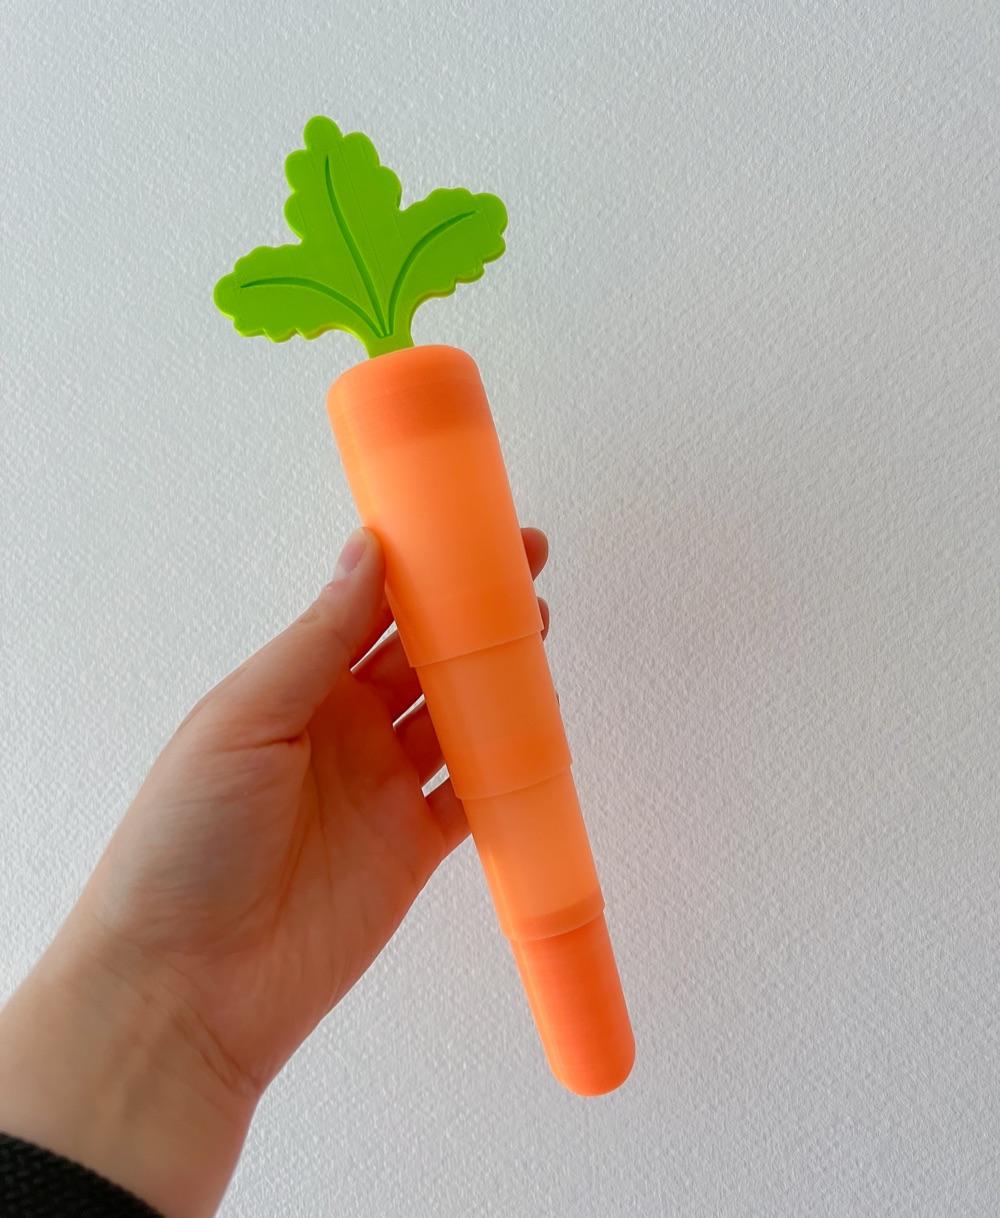 Collapsing Carrot - Sword - Cute carrot sword!
Polymaker filament - 3d model